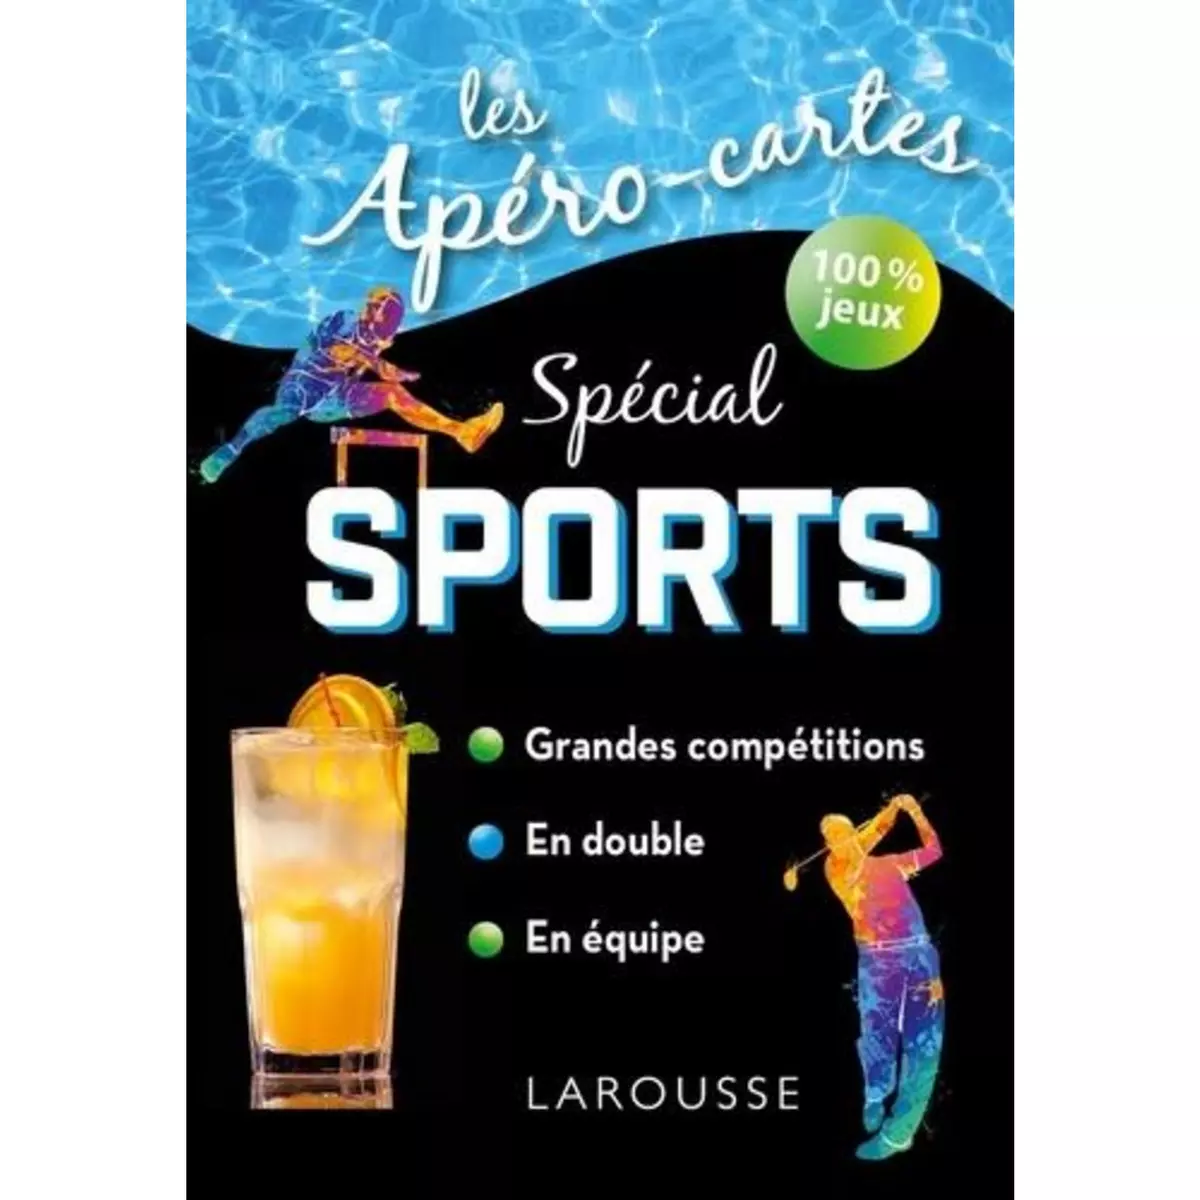  LES APERO-CARTES. SPECIAL SPORTS, Larousse